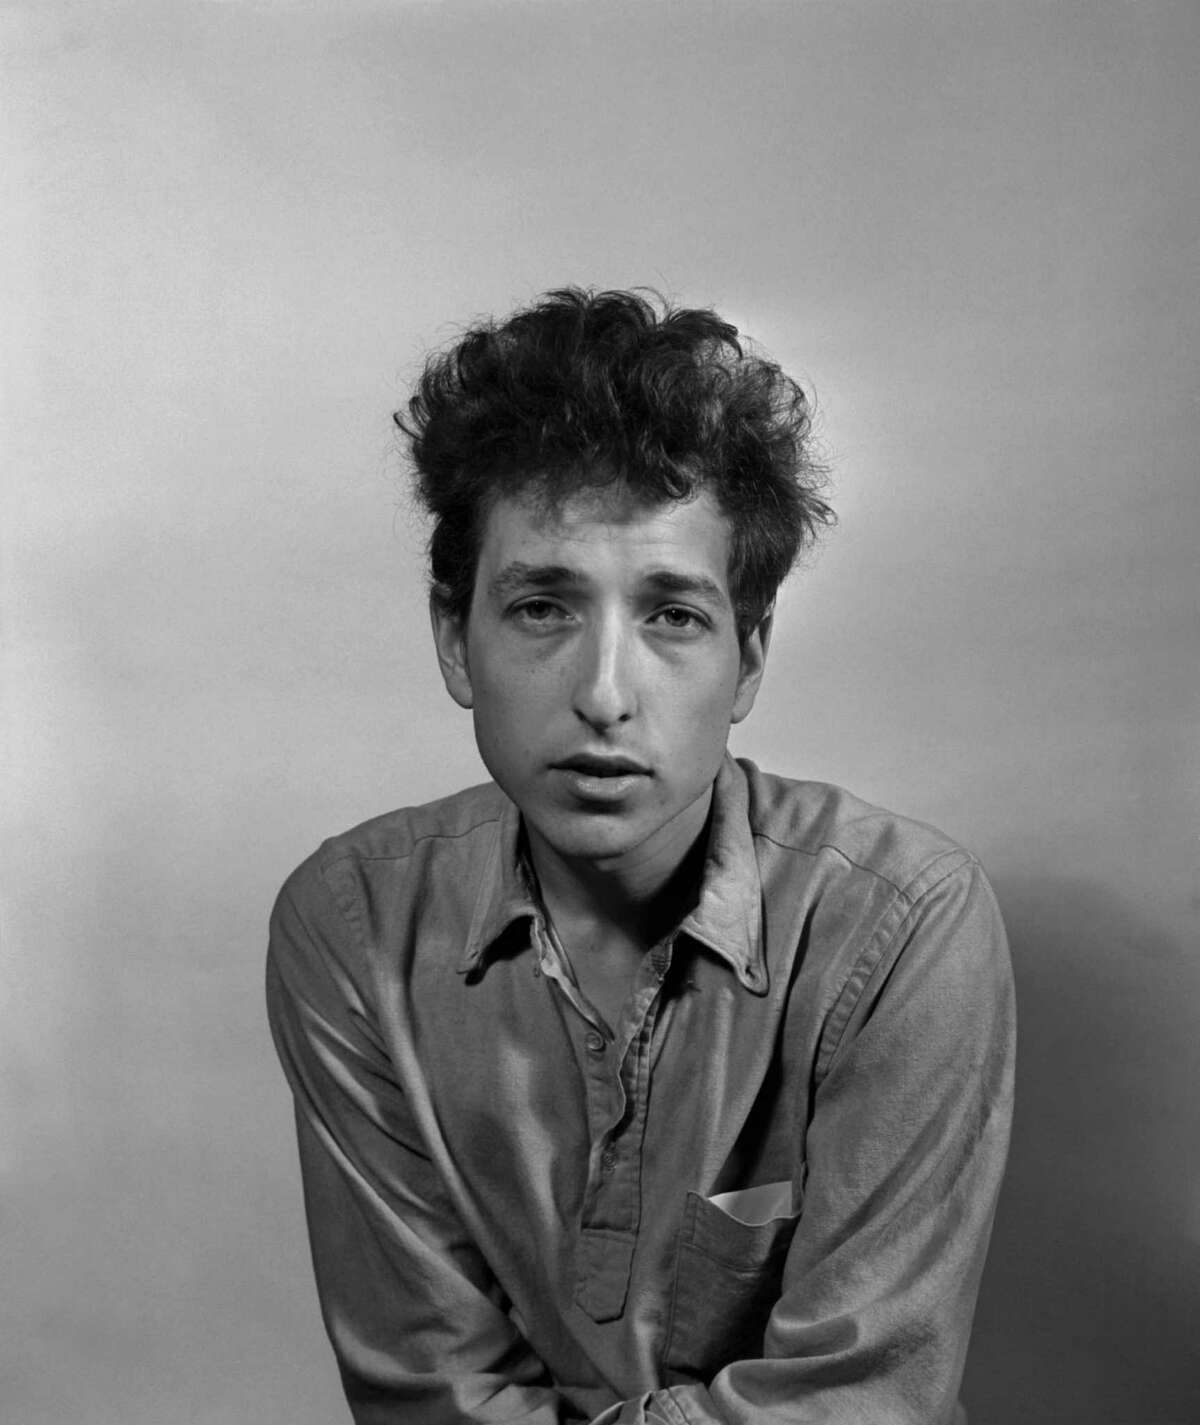 Dylan in New York in 1963.